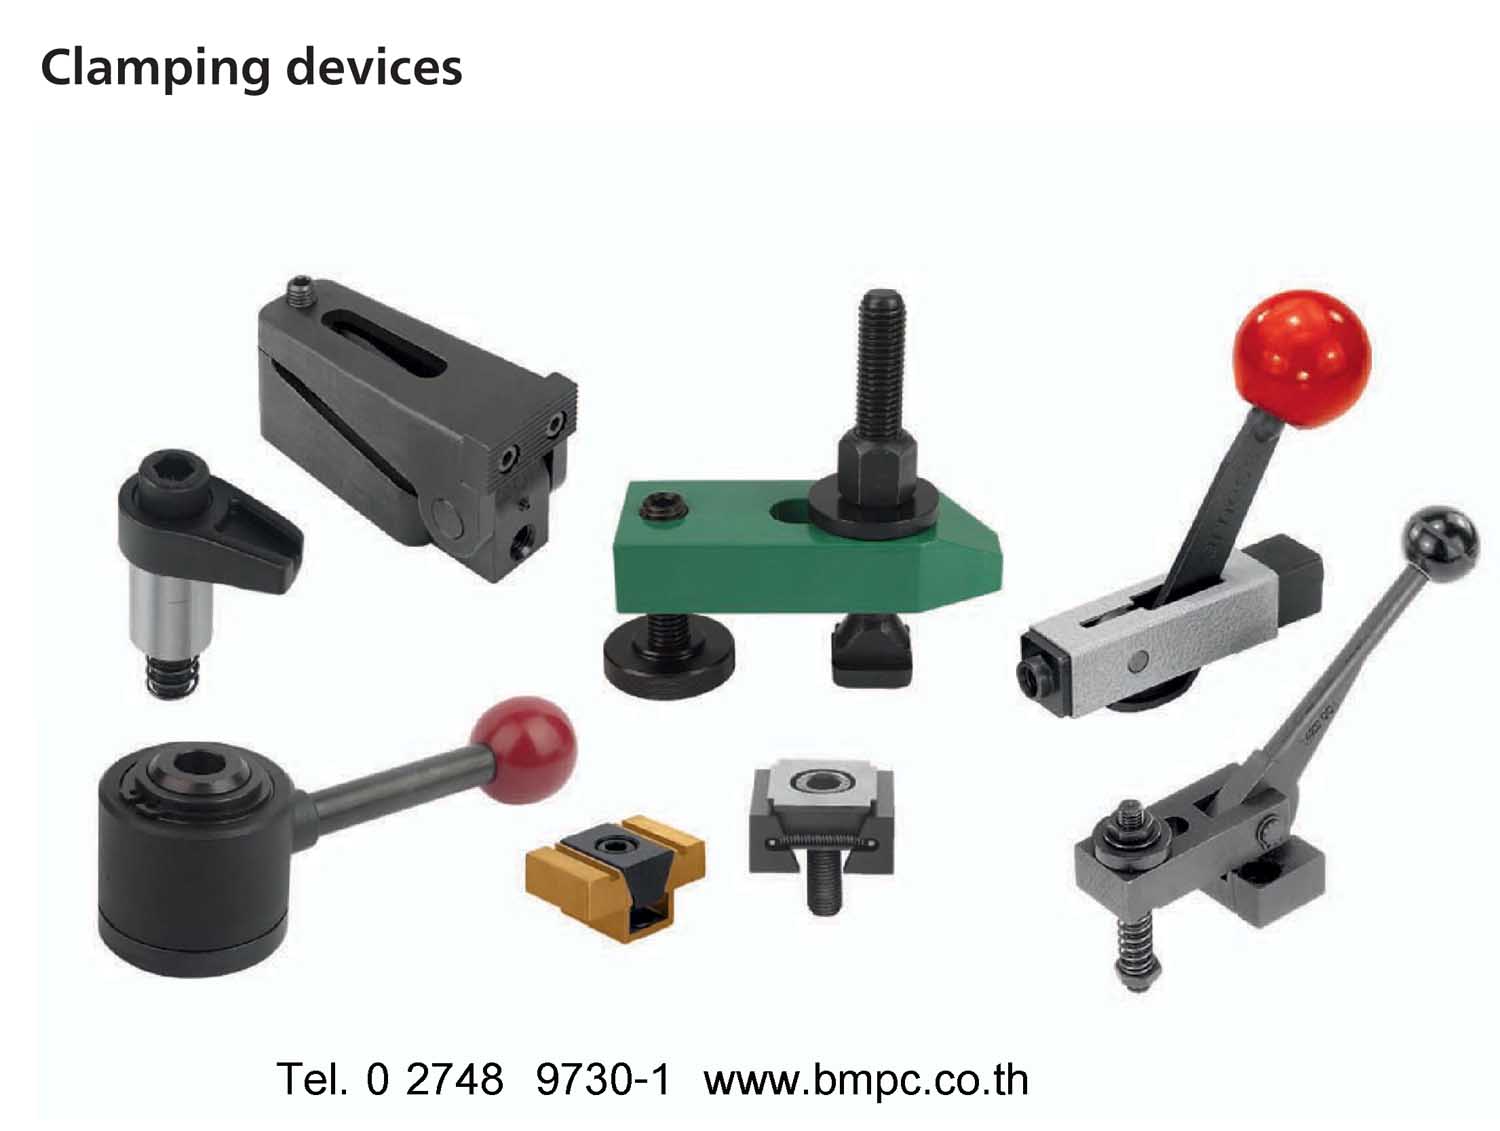 Kipp clamp lever, ด้ามขัน, Ball plunger, สกรูตัวหนอนปลายลูกปืน, locking bolt, Hand wheel, Hoist ring, star grip, index plunger